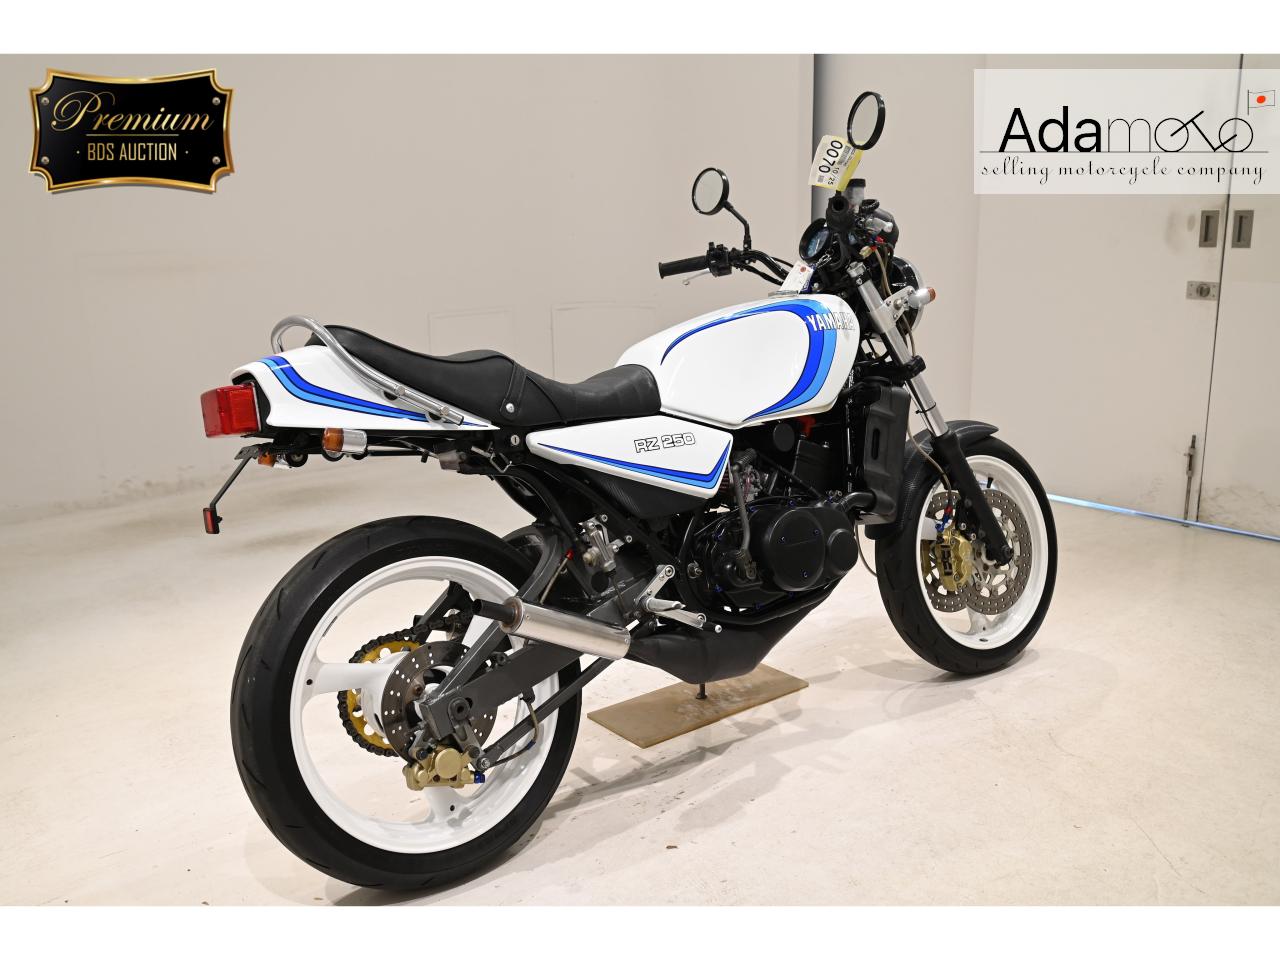 Yamaha RZ250 - Adamoto - Motorcycles from Japan